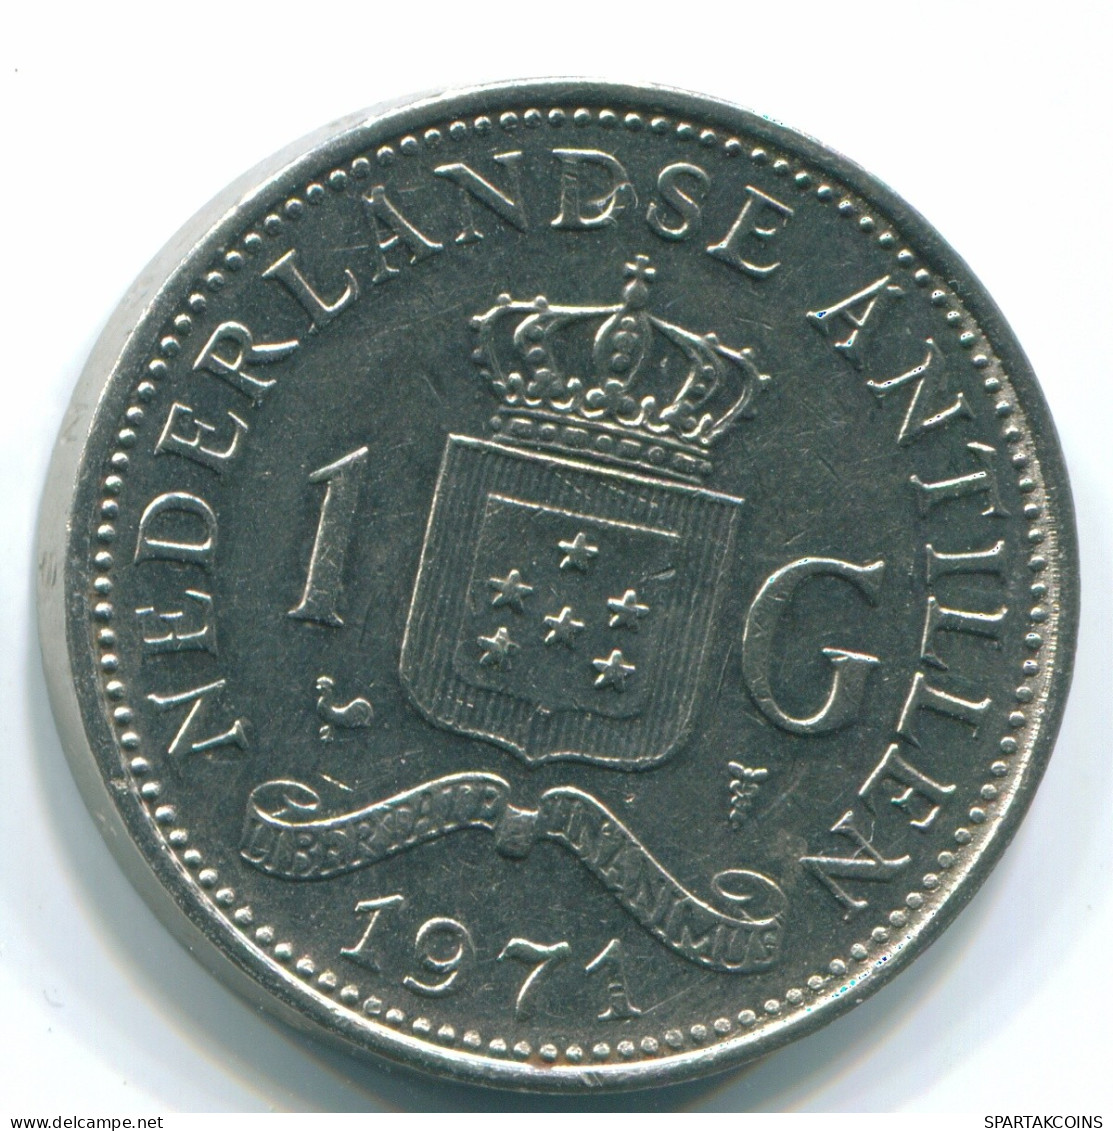 1 GULDEN 1971 NIEDERLÄNDISCHE ANTILLEN Nickel Koloniale Münze #S11969.D.A - Antilles Néerlandaises